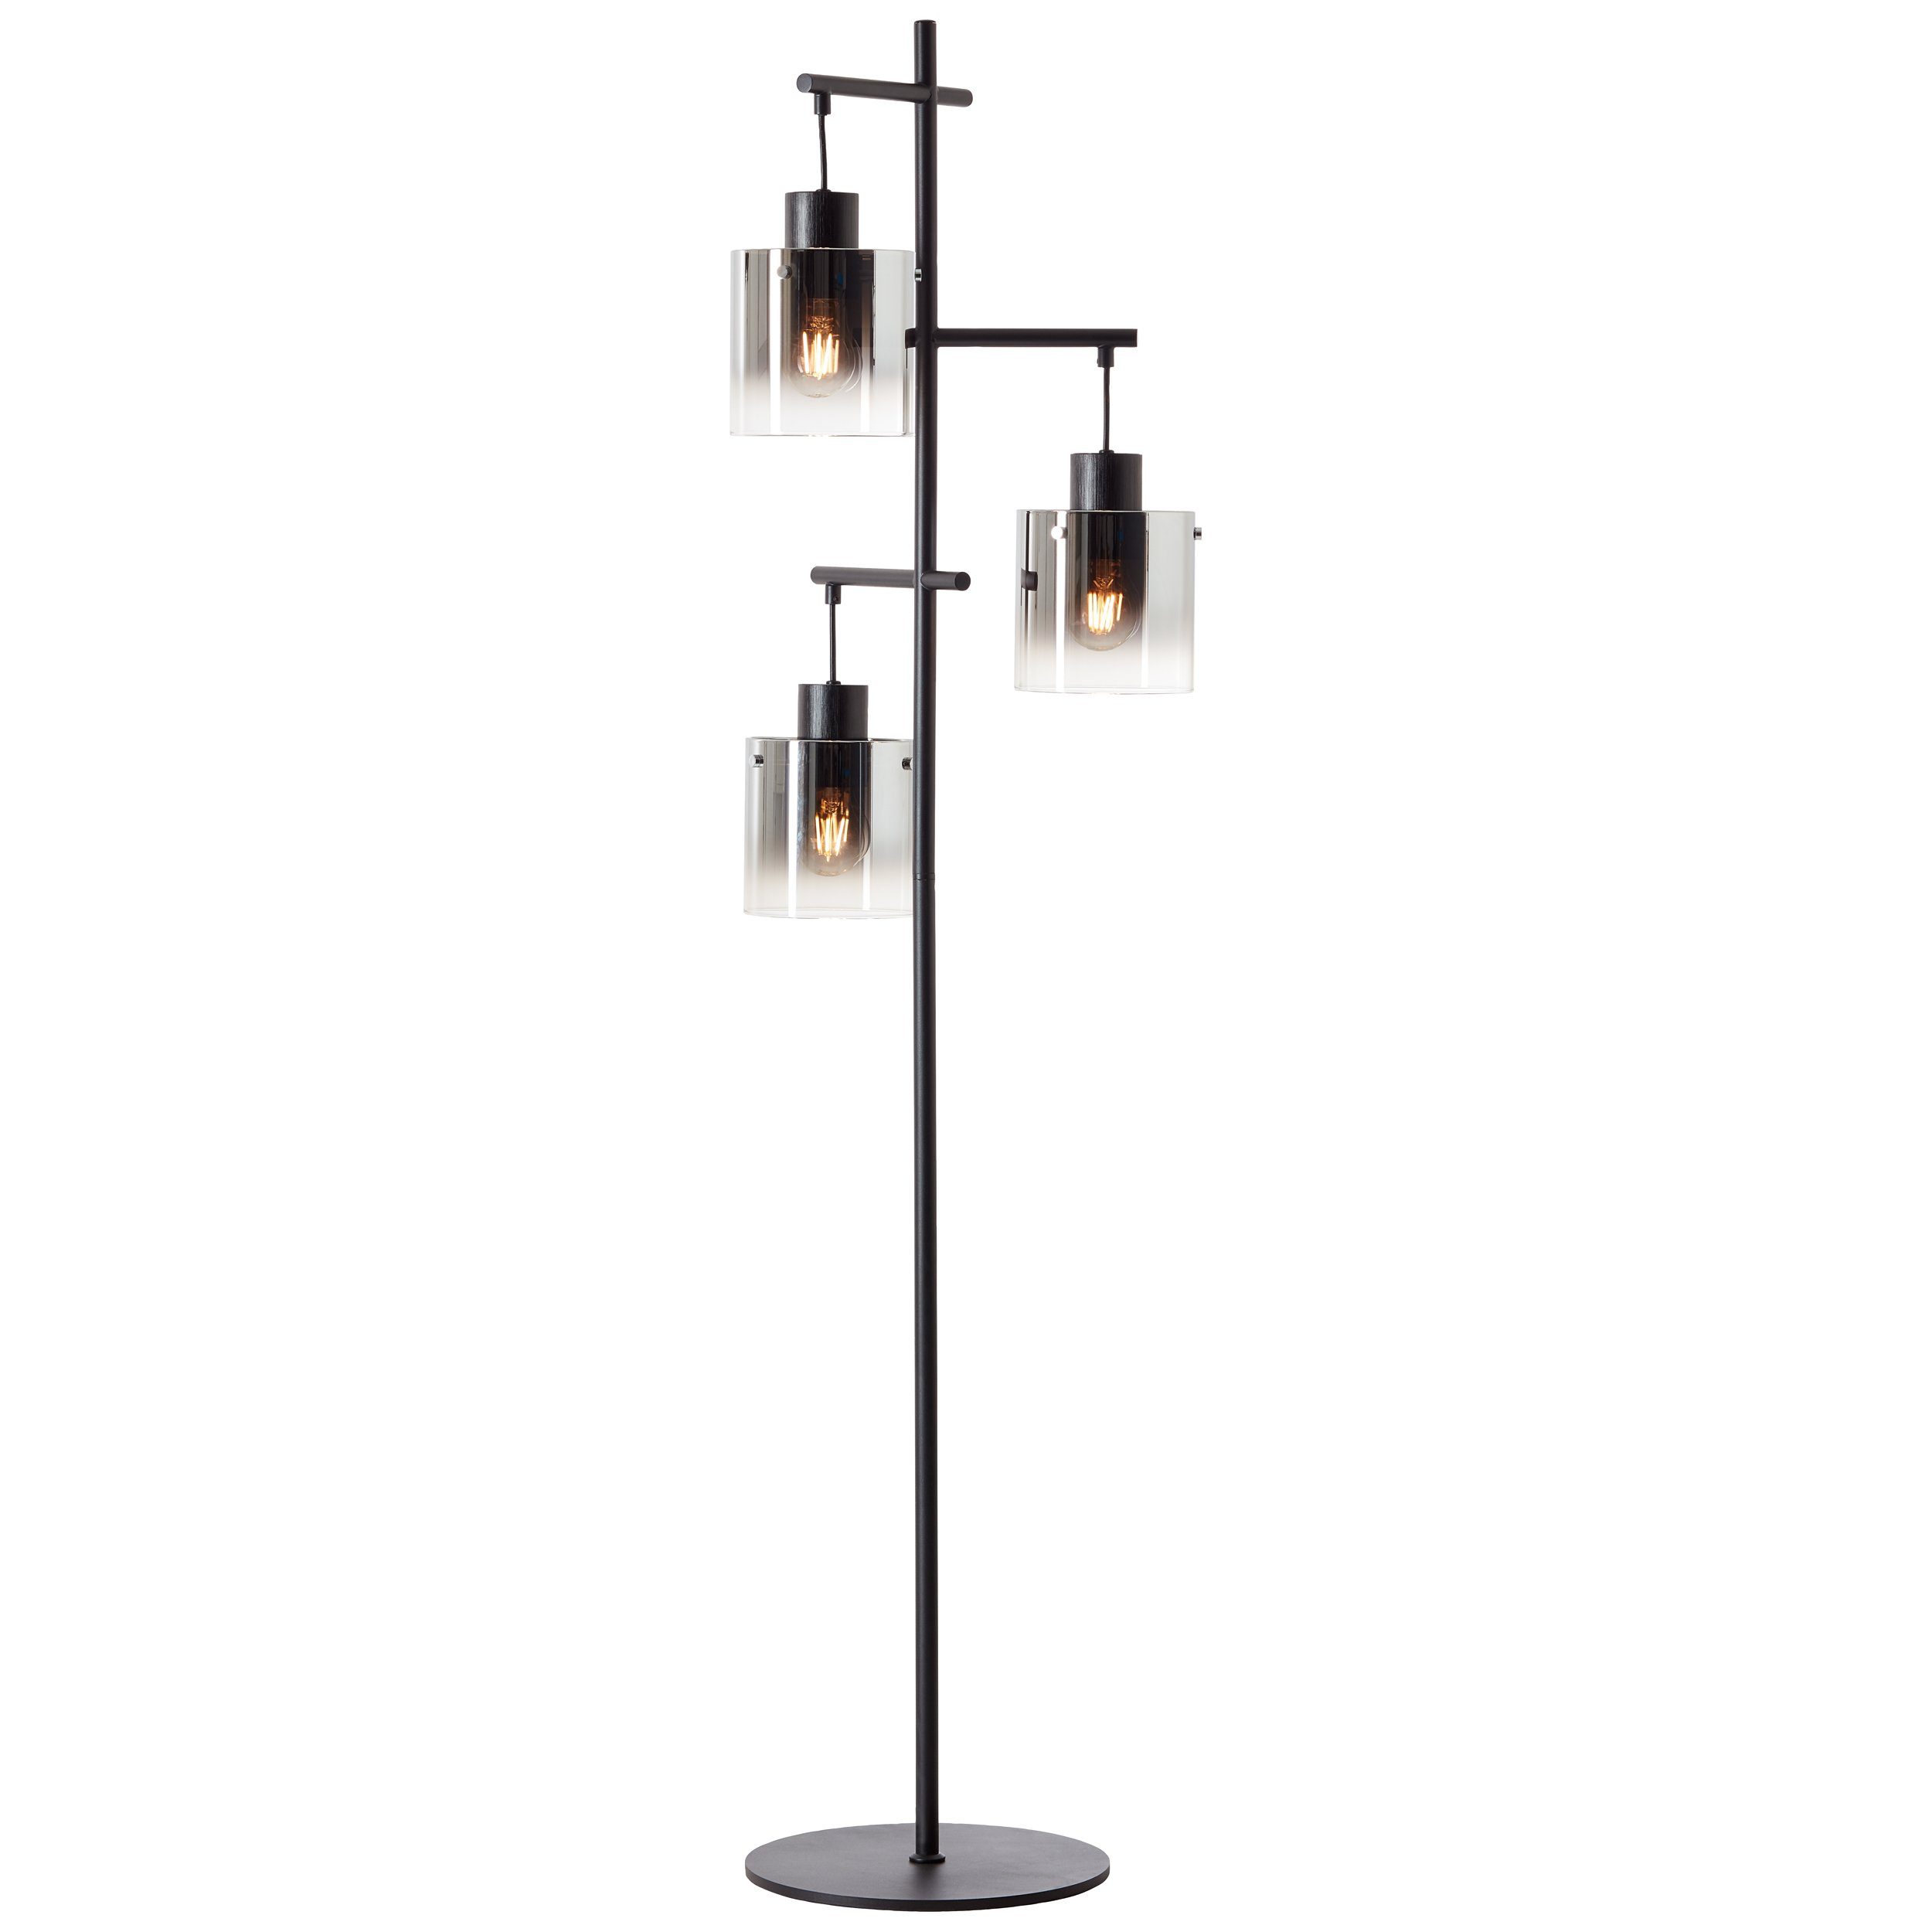 Lightbox Stehlampe, ohne Leuchtmittel, Stehlampe, 152,2 cm Höhe, Ø 46 cm, 3 x E27, max. 52 W, Metall/Glas